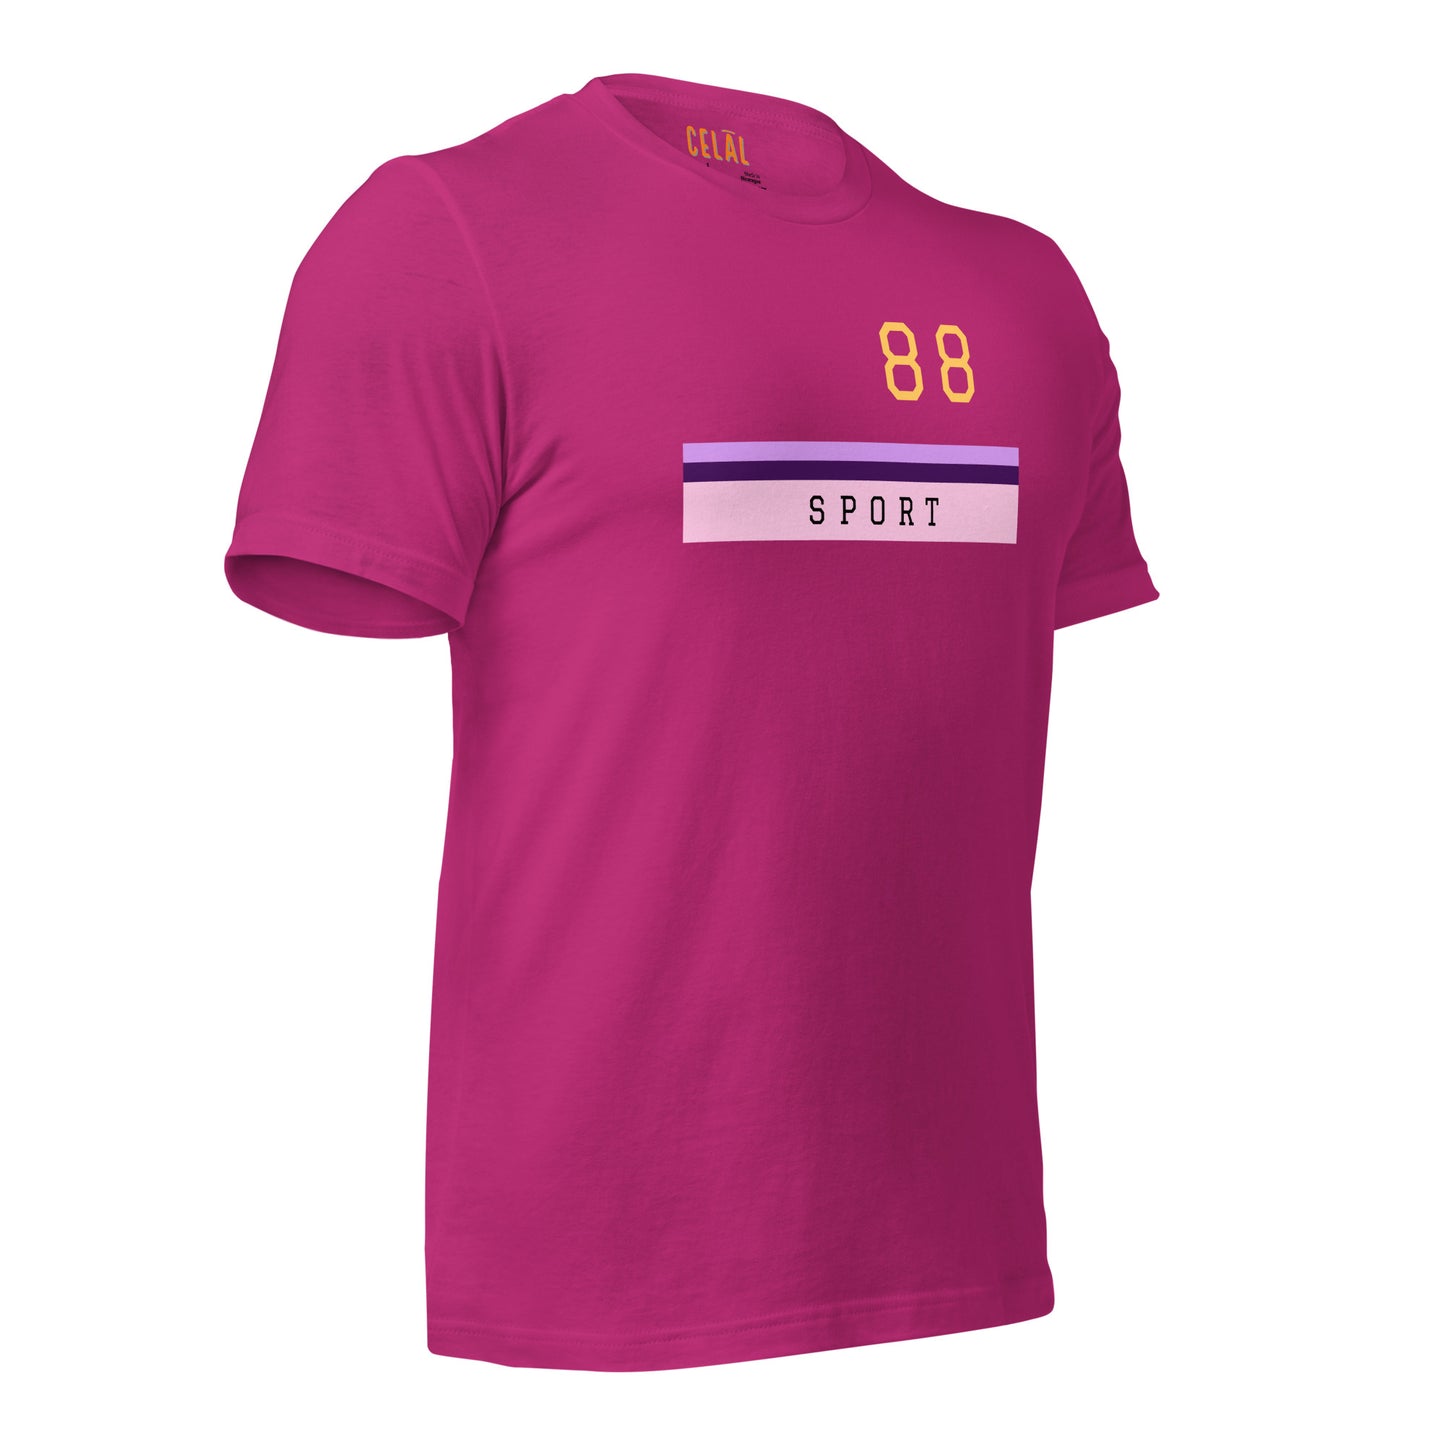 88 Unisex t-shirt